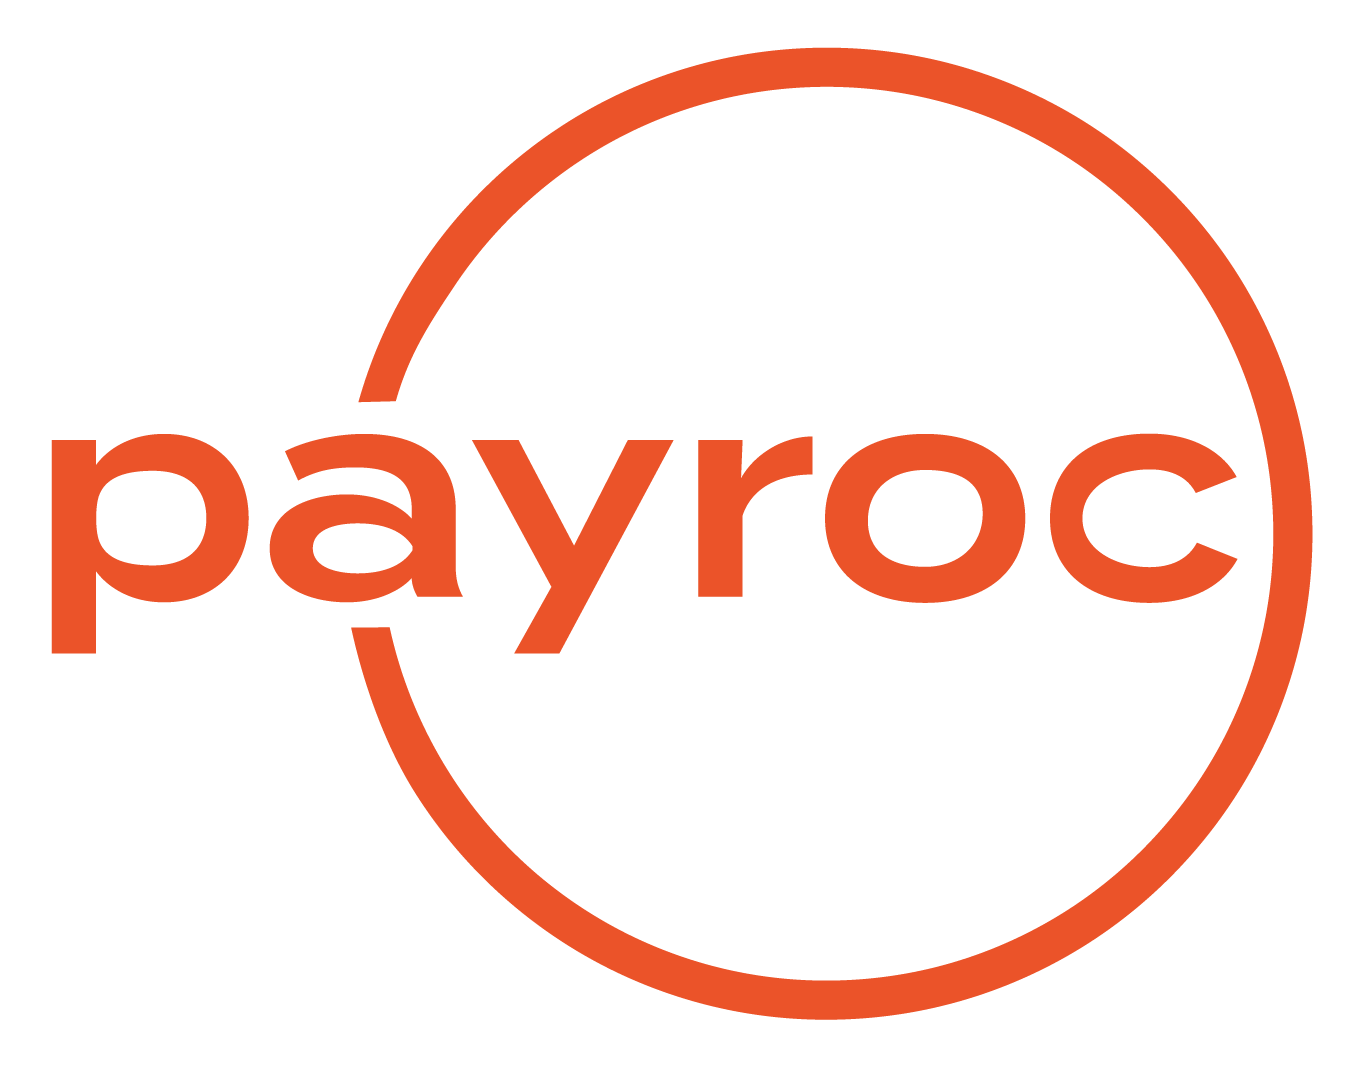 Payroc_LOGO_Orange